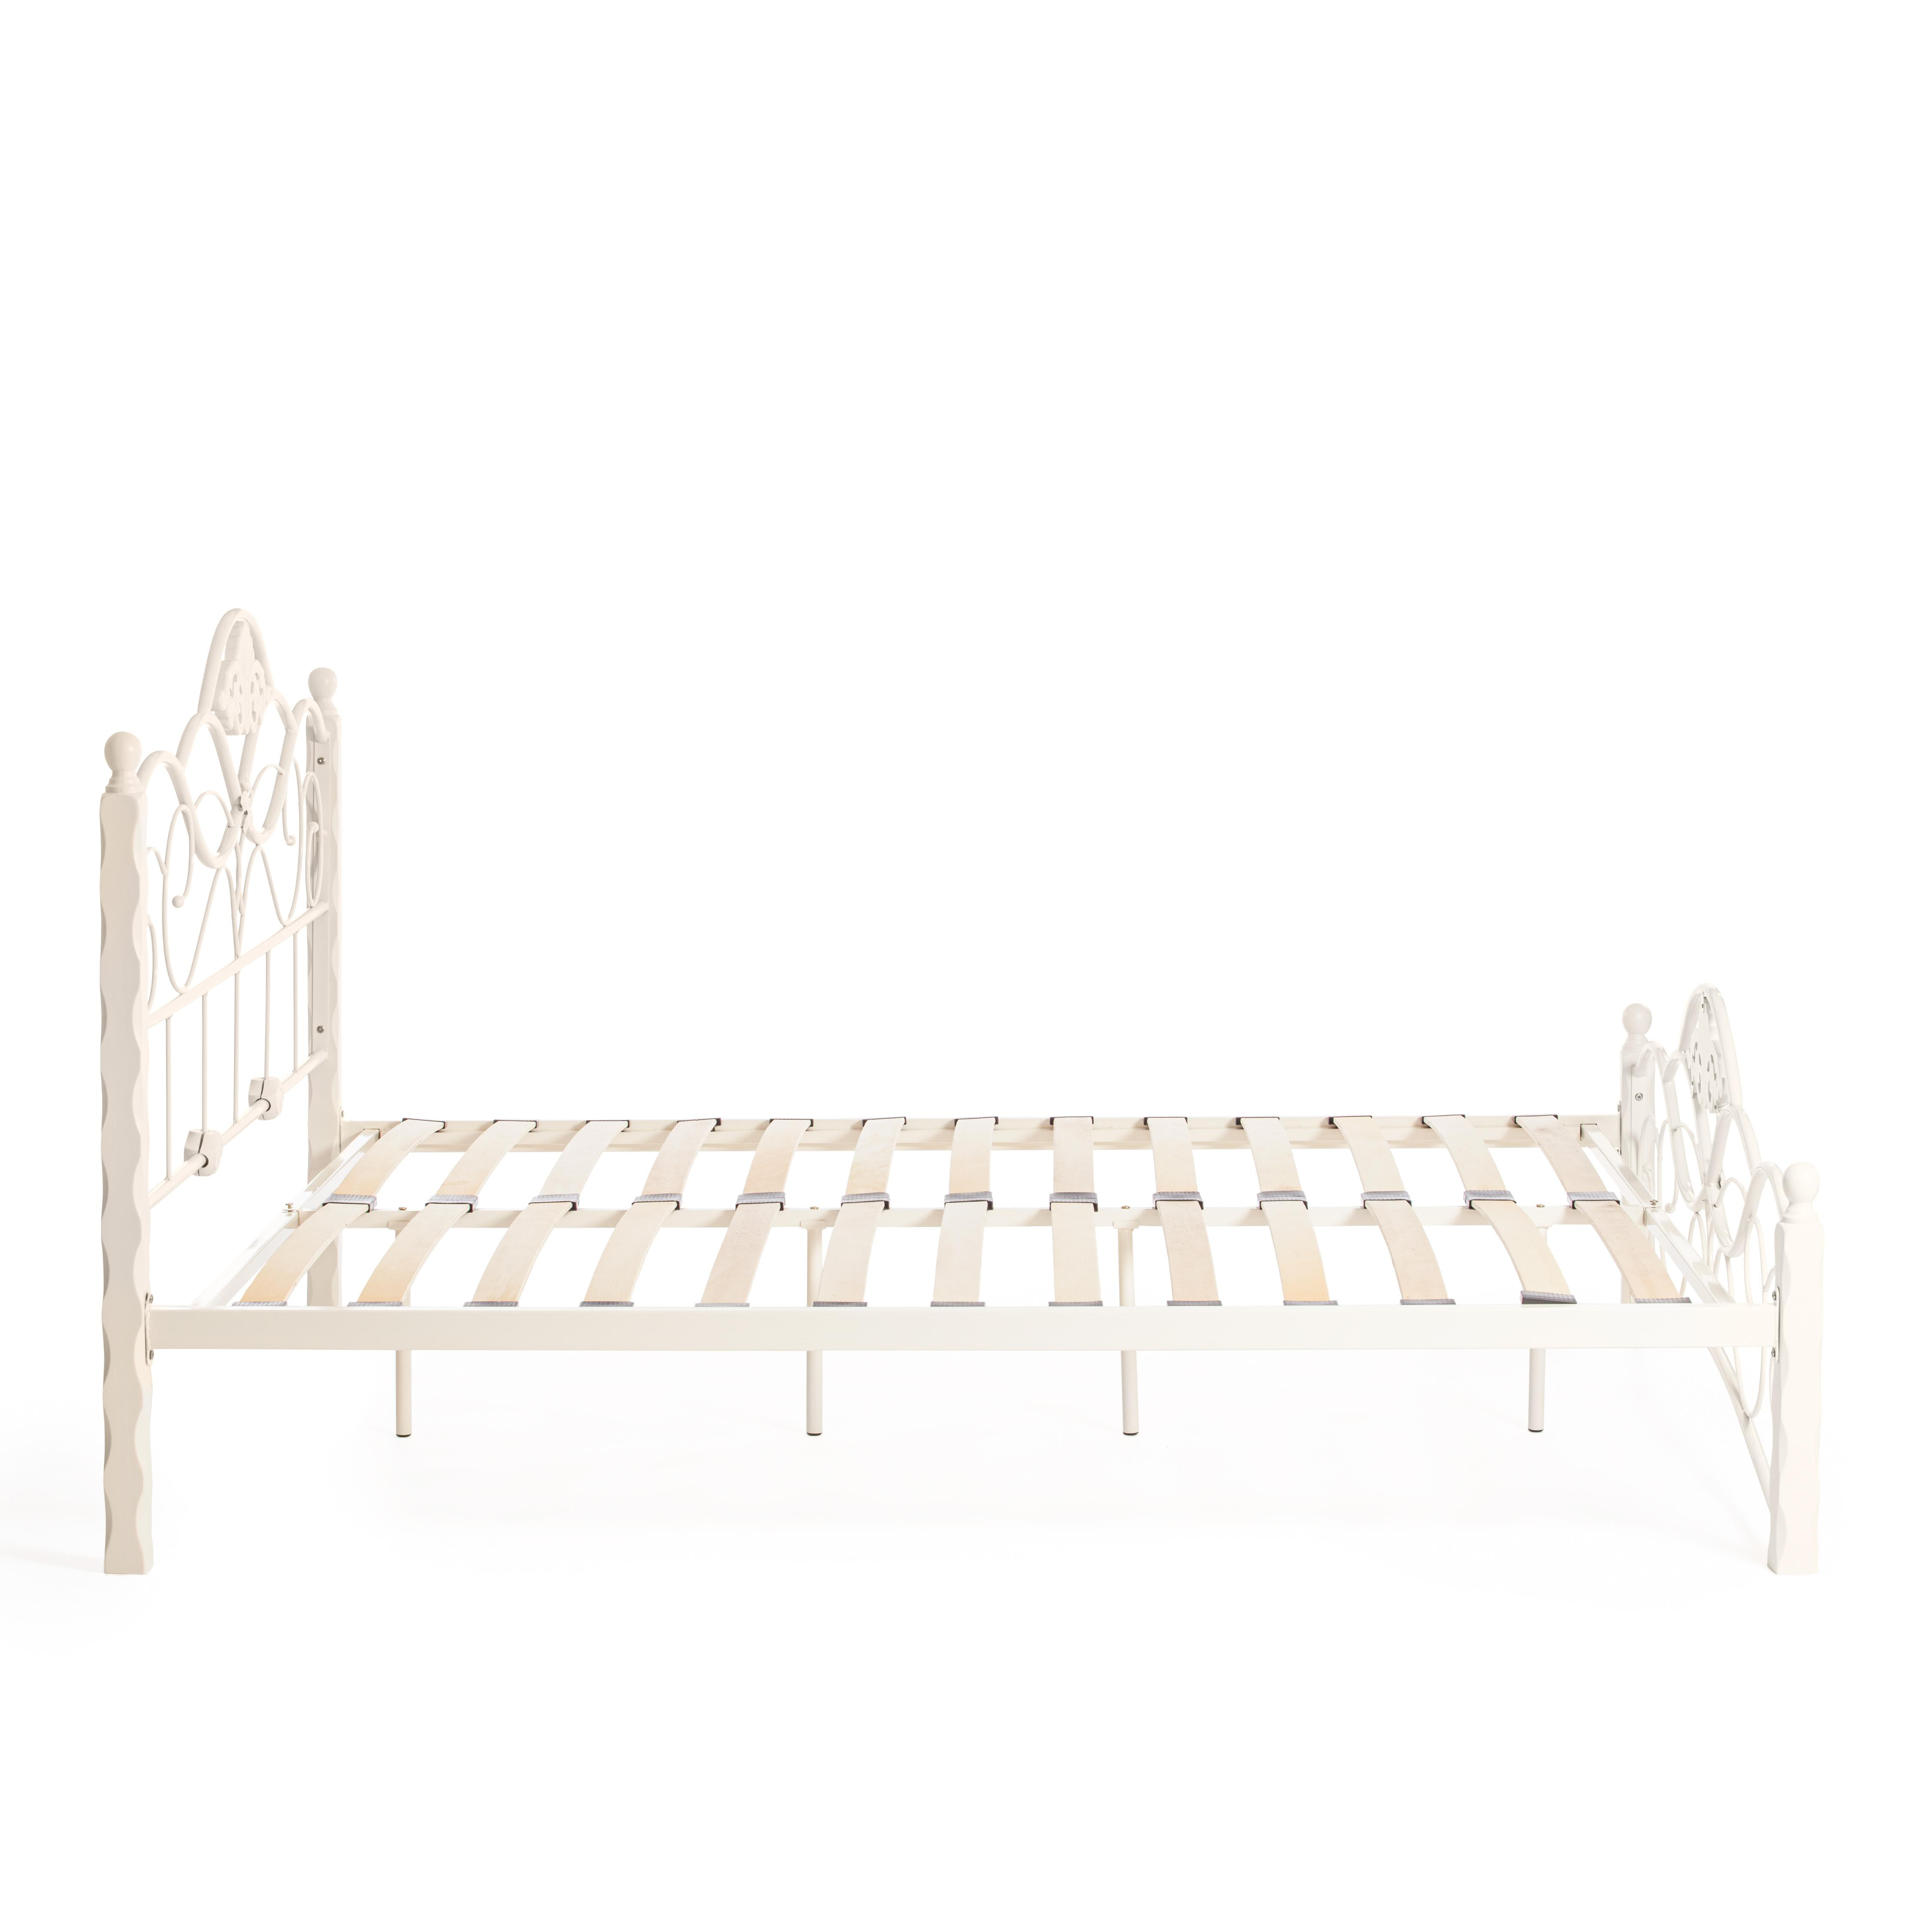 Кровать CANZONA Wood slat base дерево гевея/металл, 160*200 см (Queen bed), Белый (butter white)